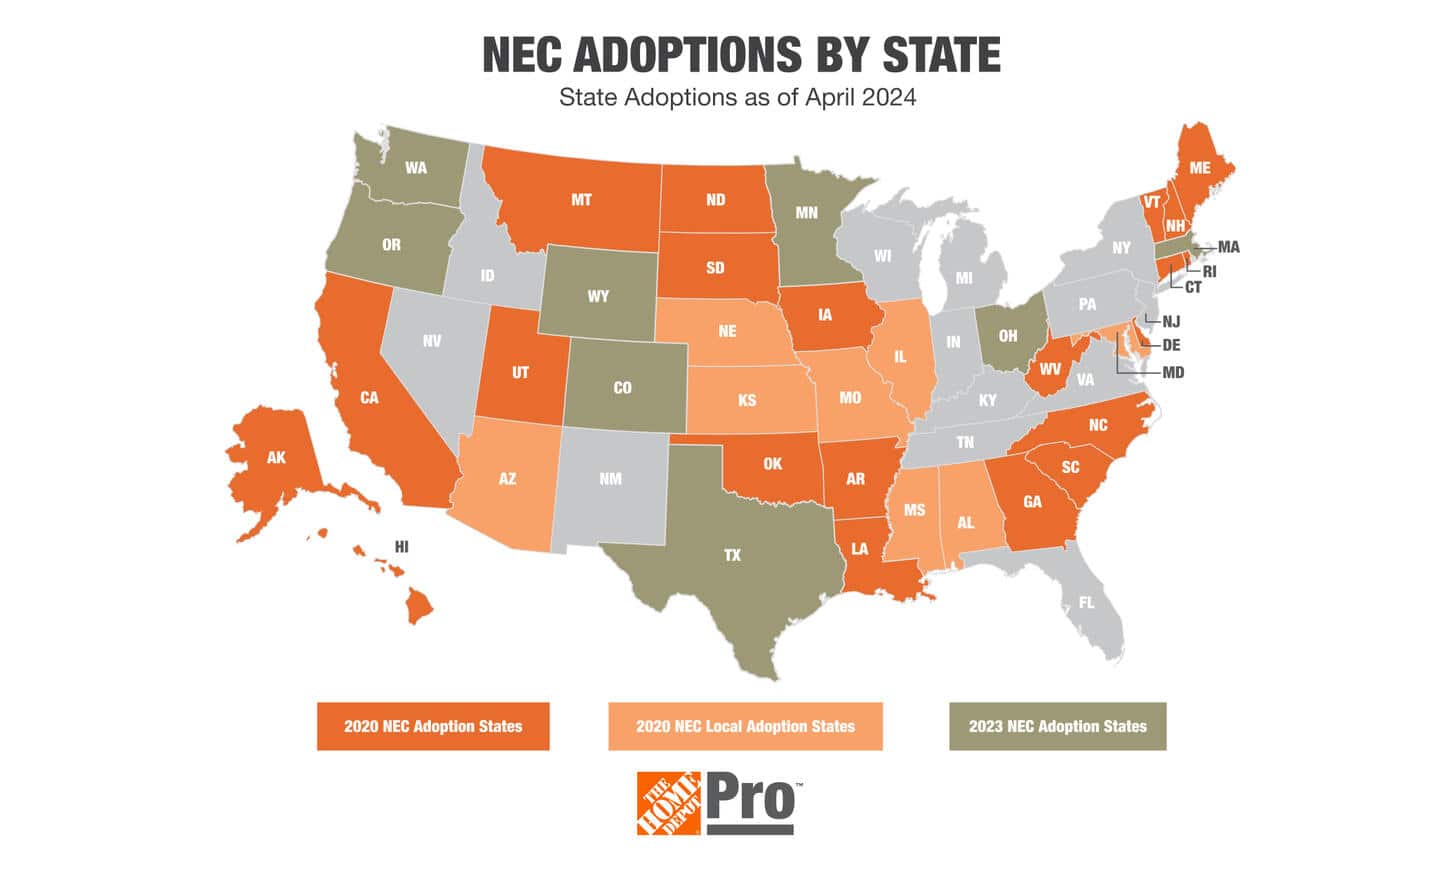 NEC 2020 adoption status by state